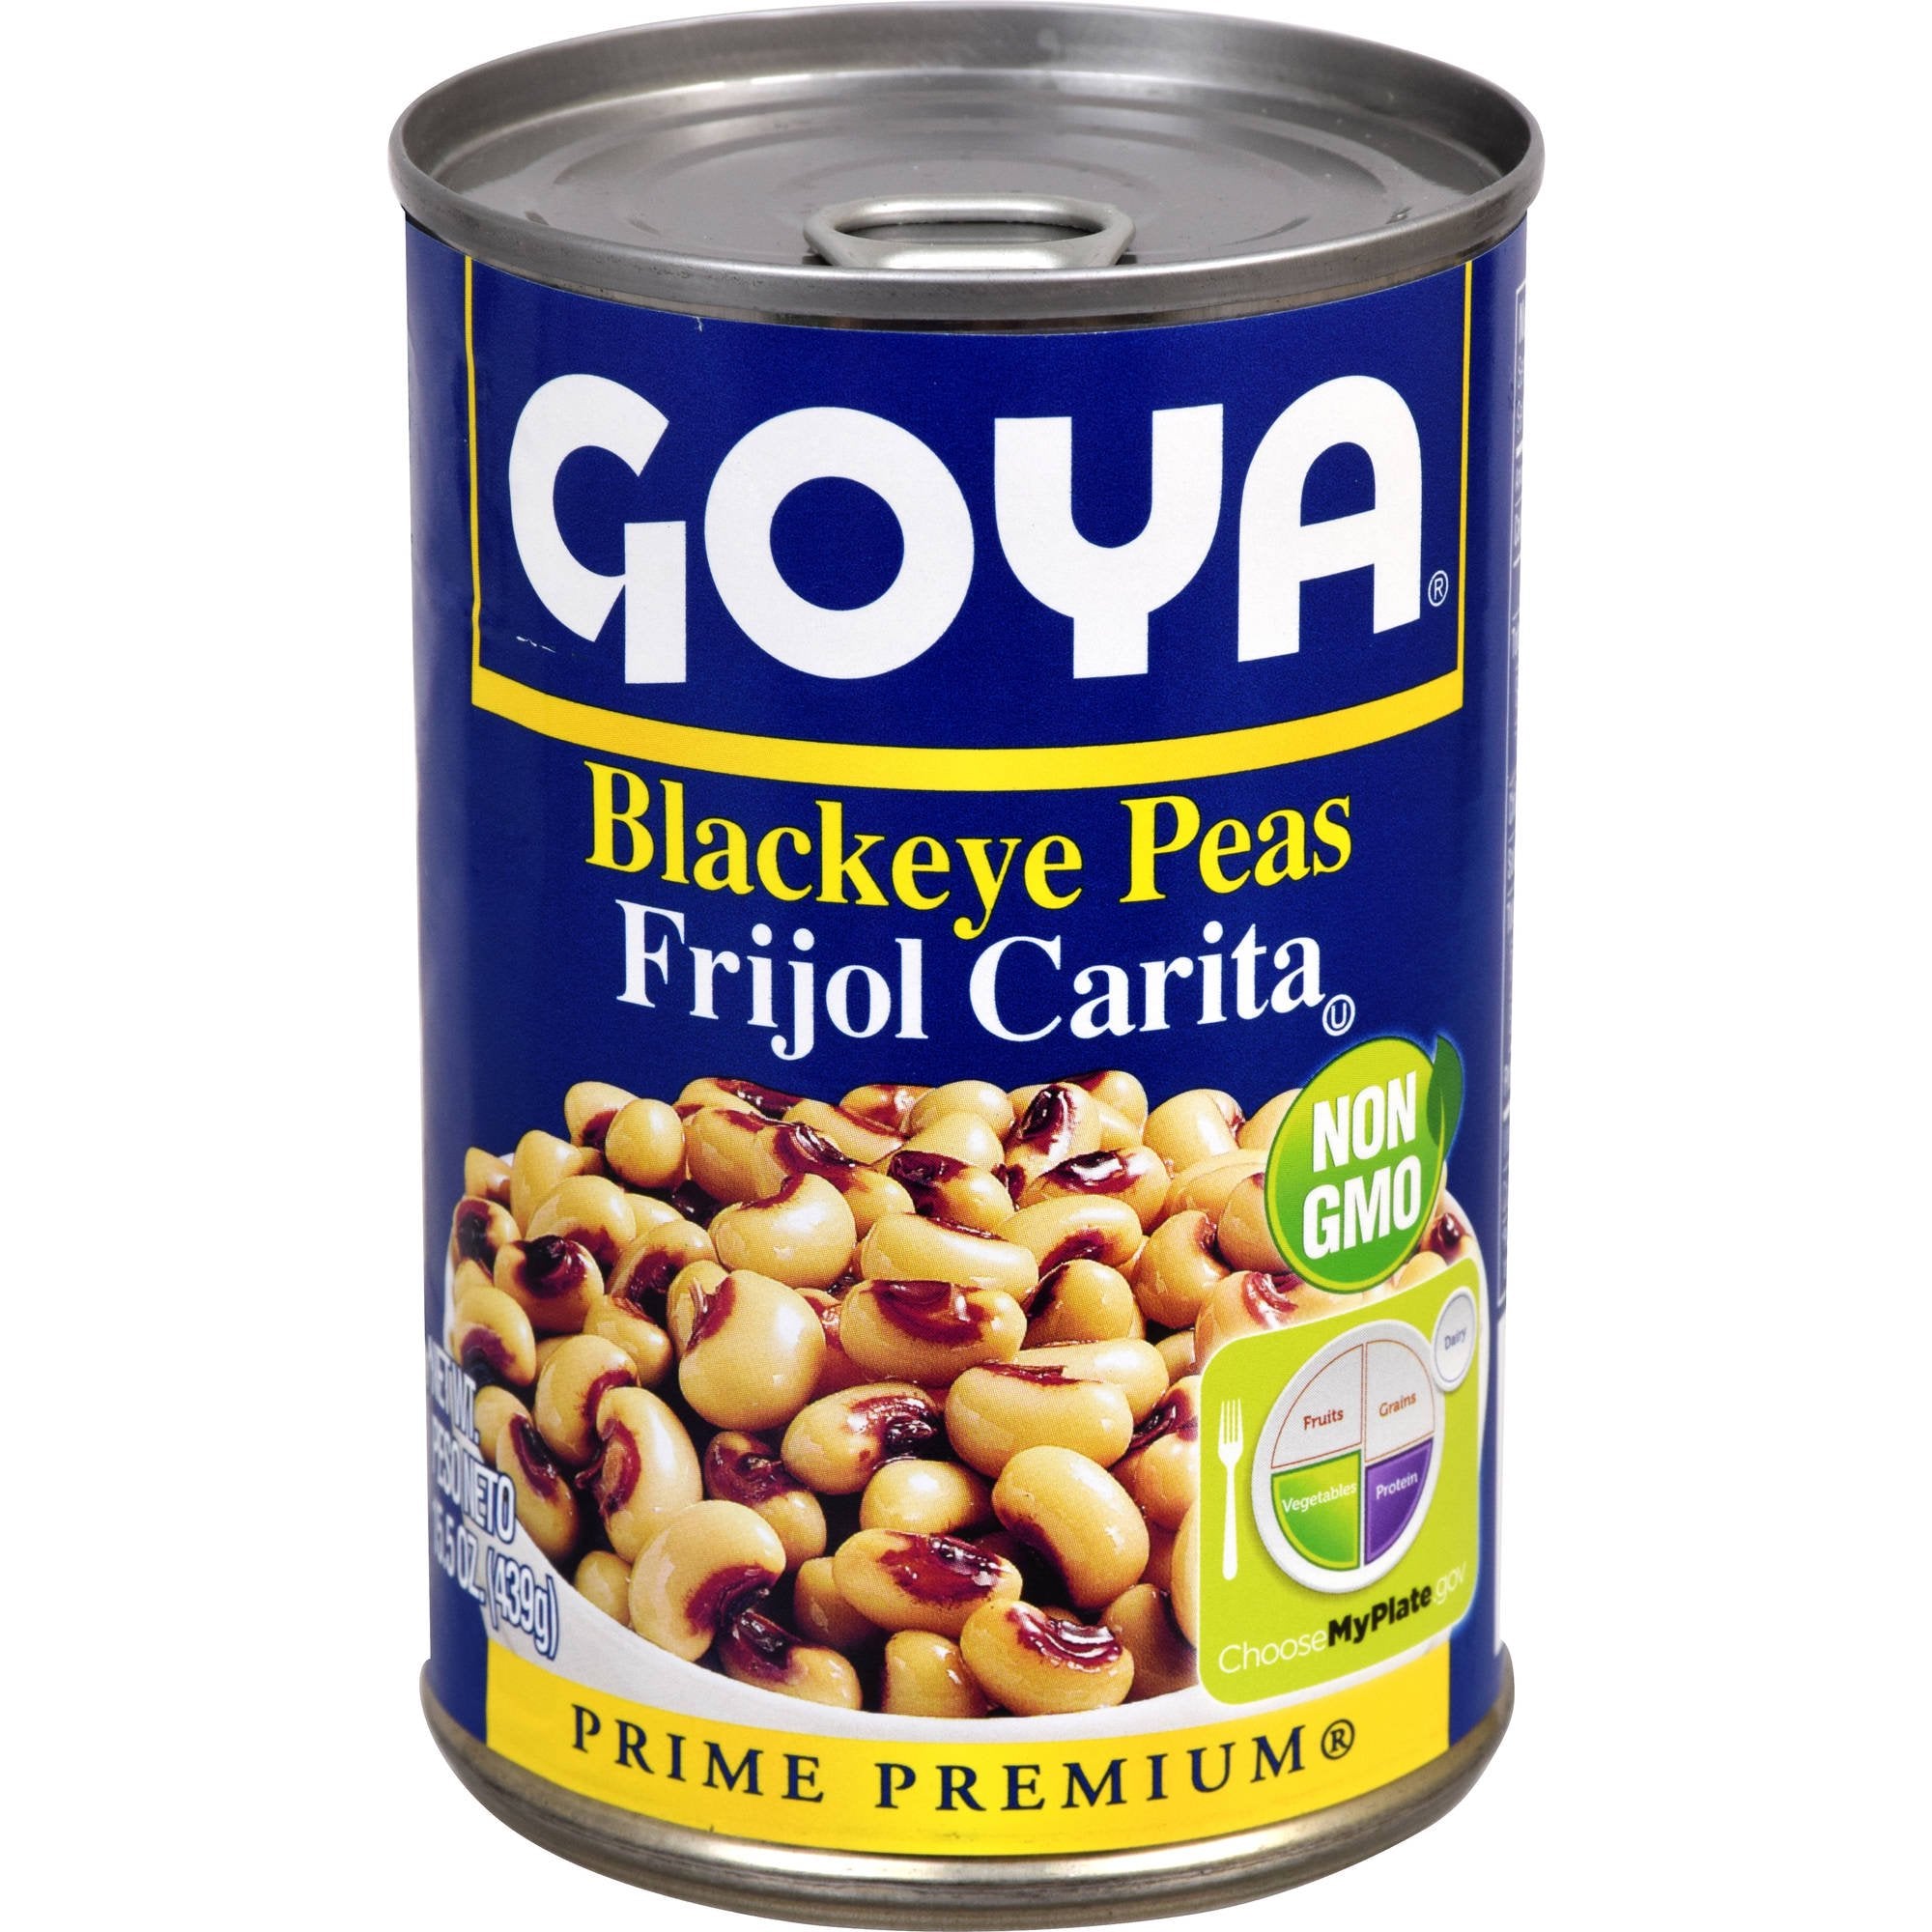 Goya BlackEye Peas